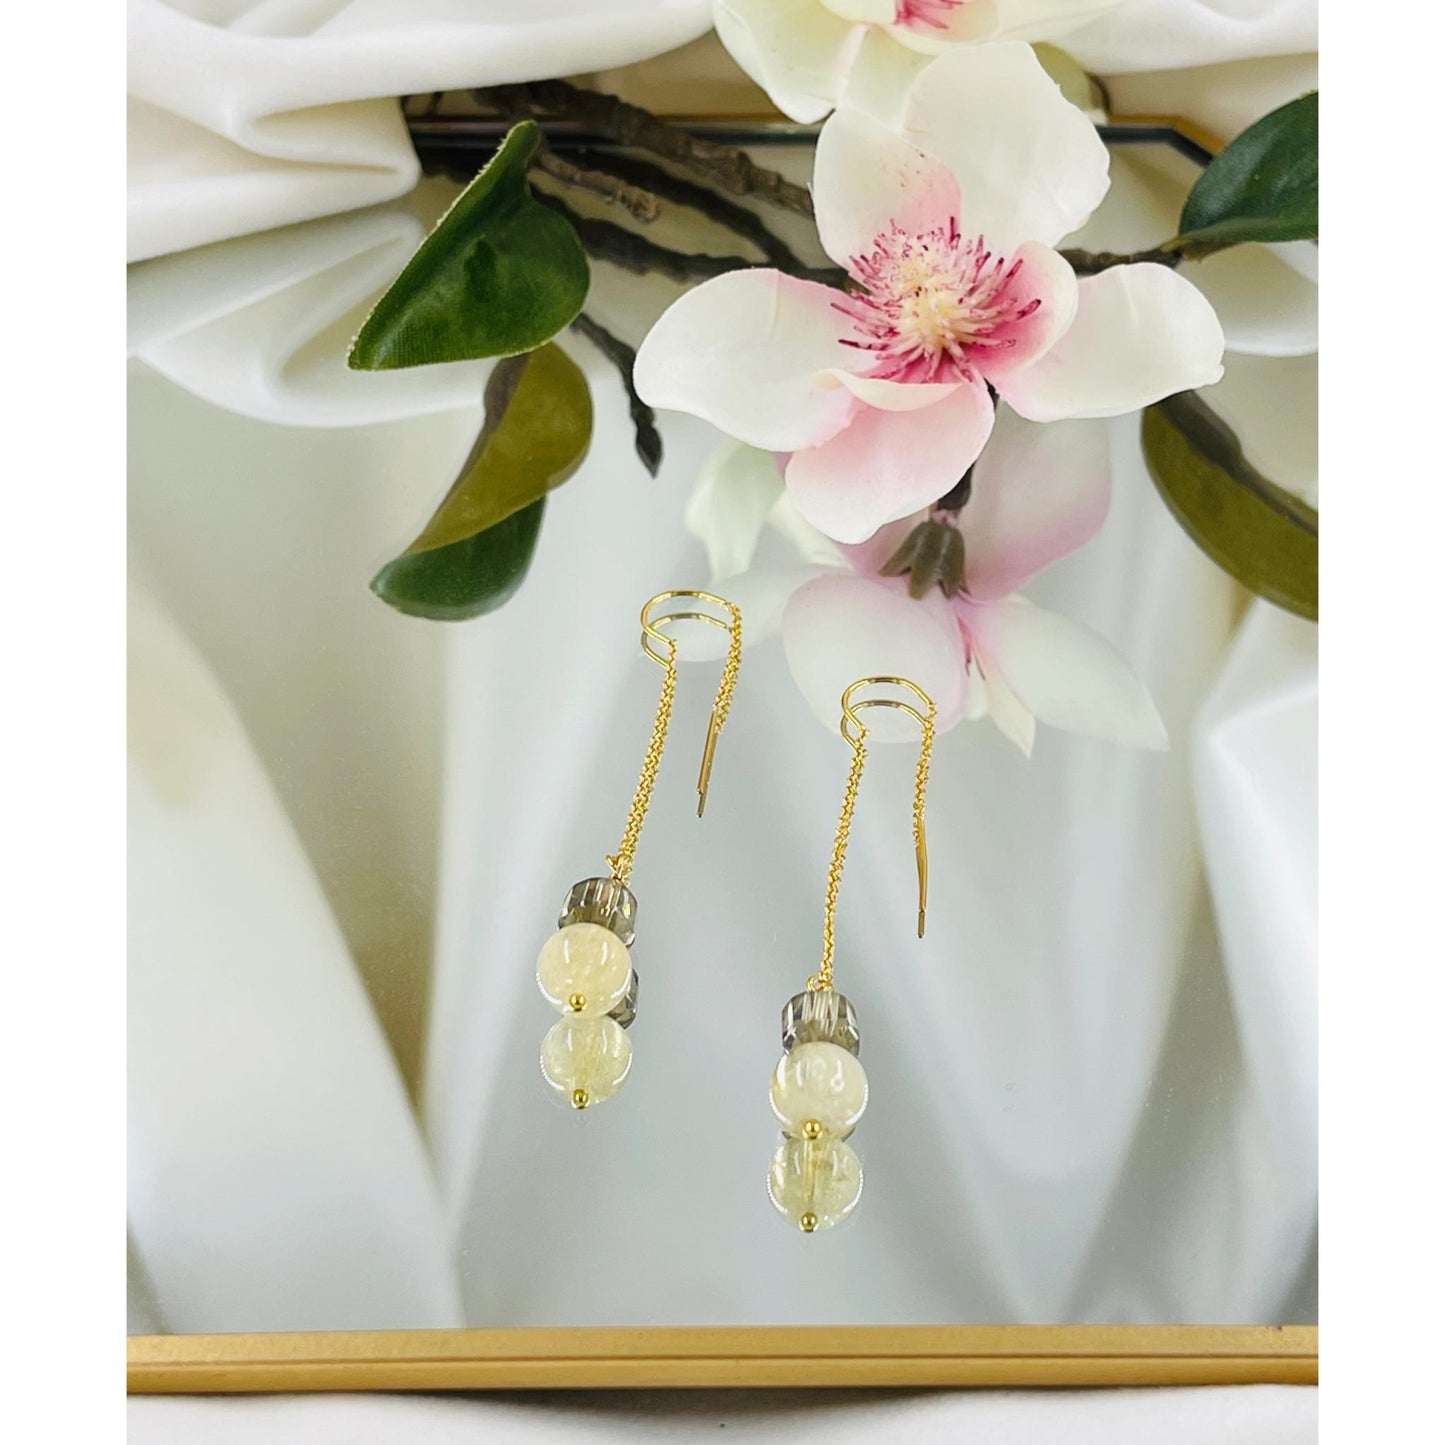 Maile Earrings-Threader Earrings-Smoky Quartz Gemstone-Citrine Gemstone-Gold Earrings-Carabella By Cheryl